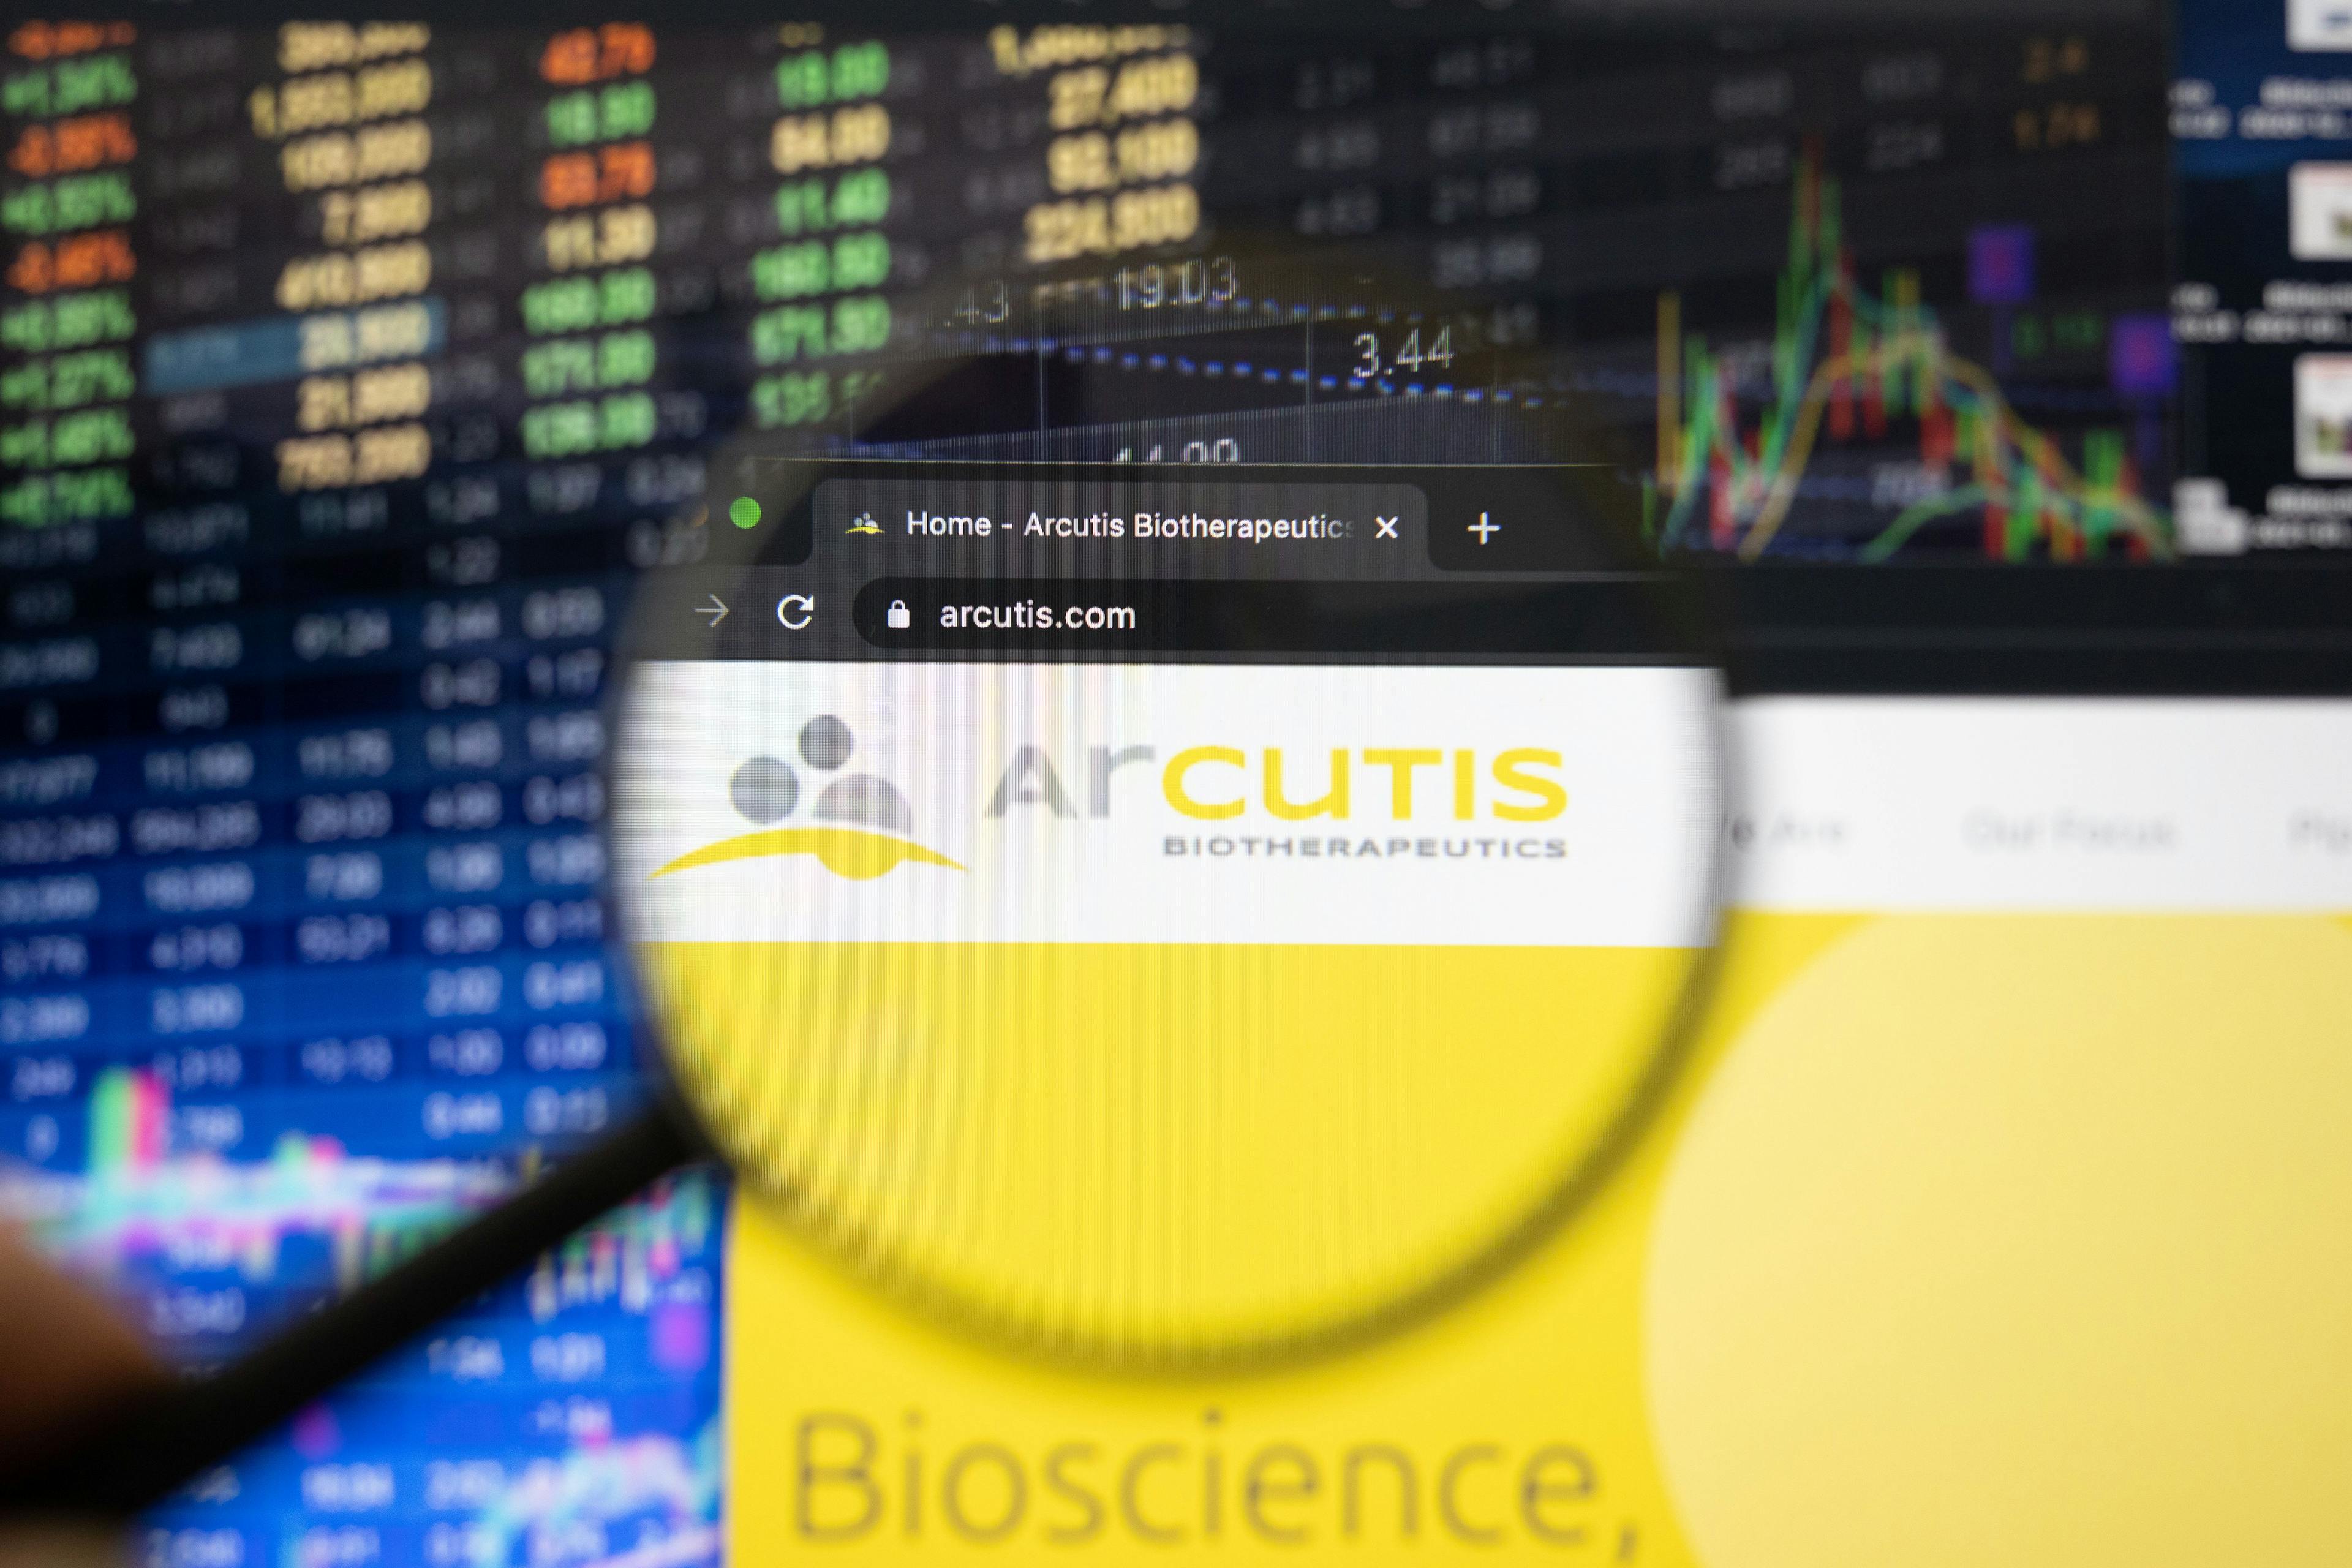 Arcutis Biotherapeutics company logo on a website